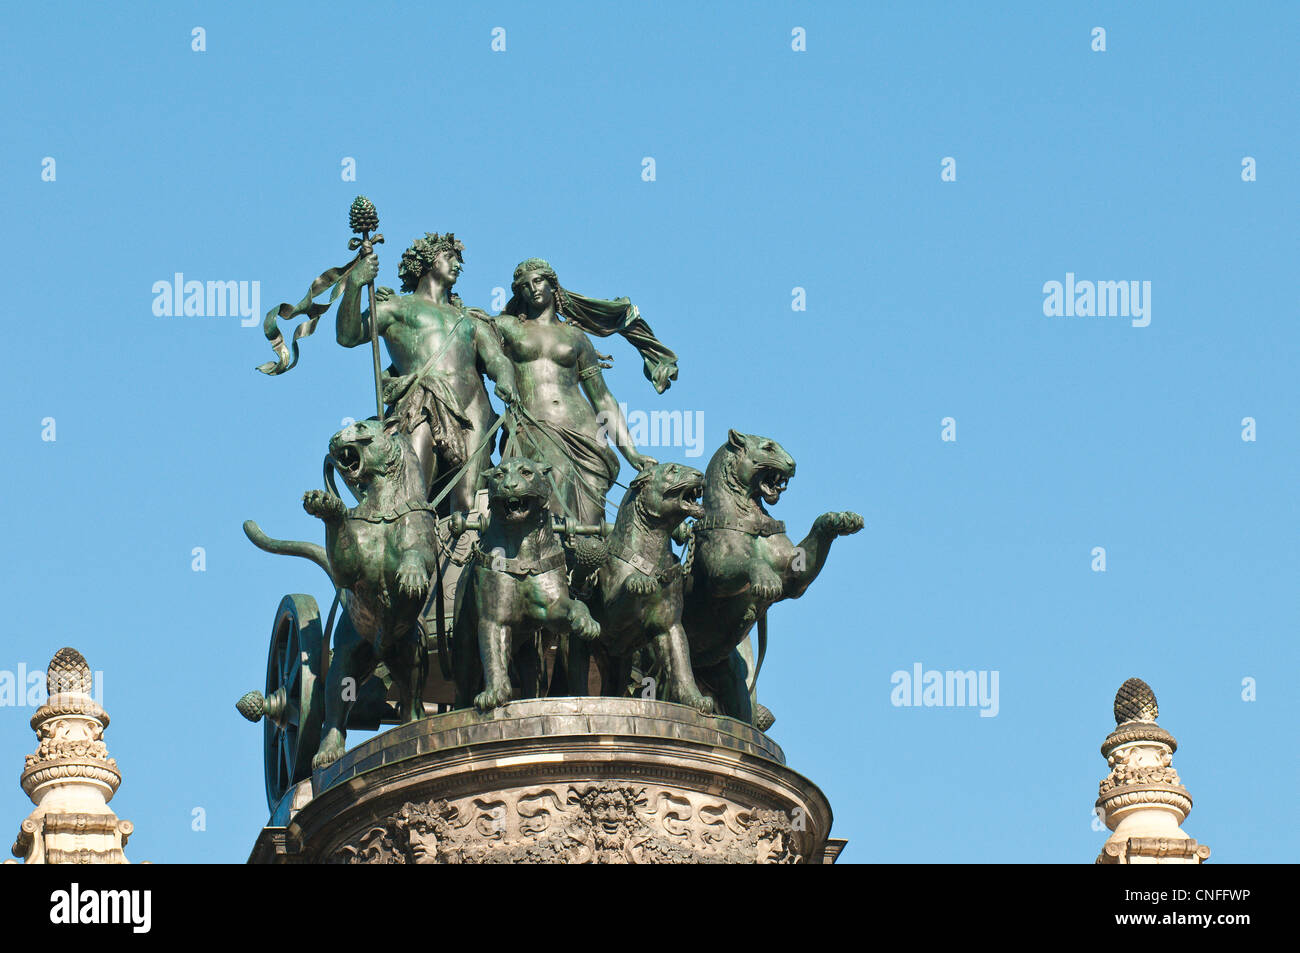 Au sommet de la sculpture Quadriga Panther (l'opéra Semperoper), Dresde, Allemagne. Banque D'Images